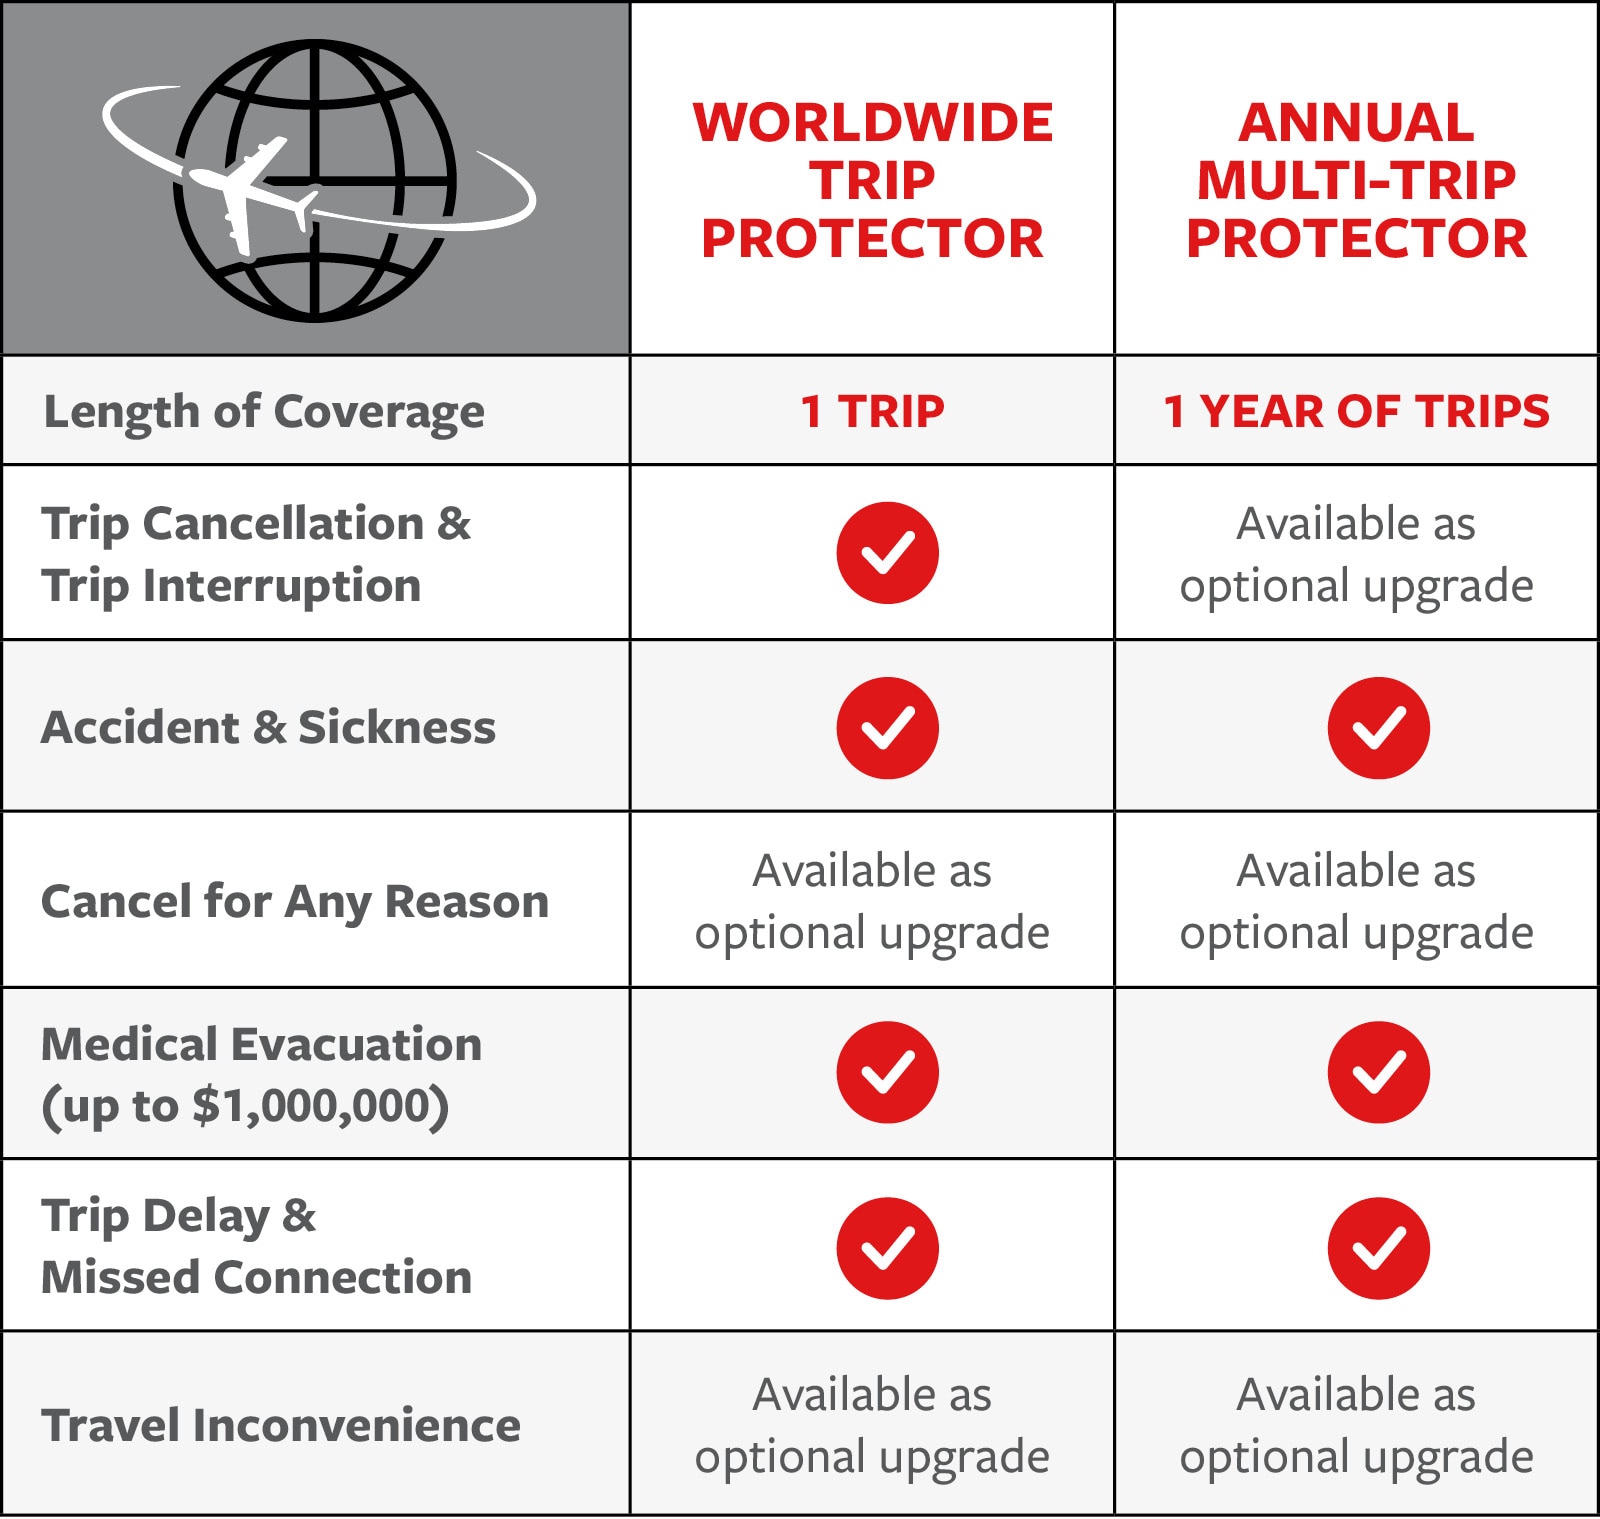 Worldwide Trip Protector vs Annual Multi-Trip Protector, see details below